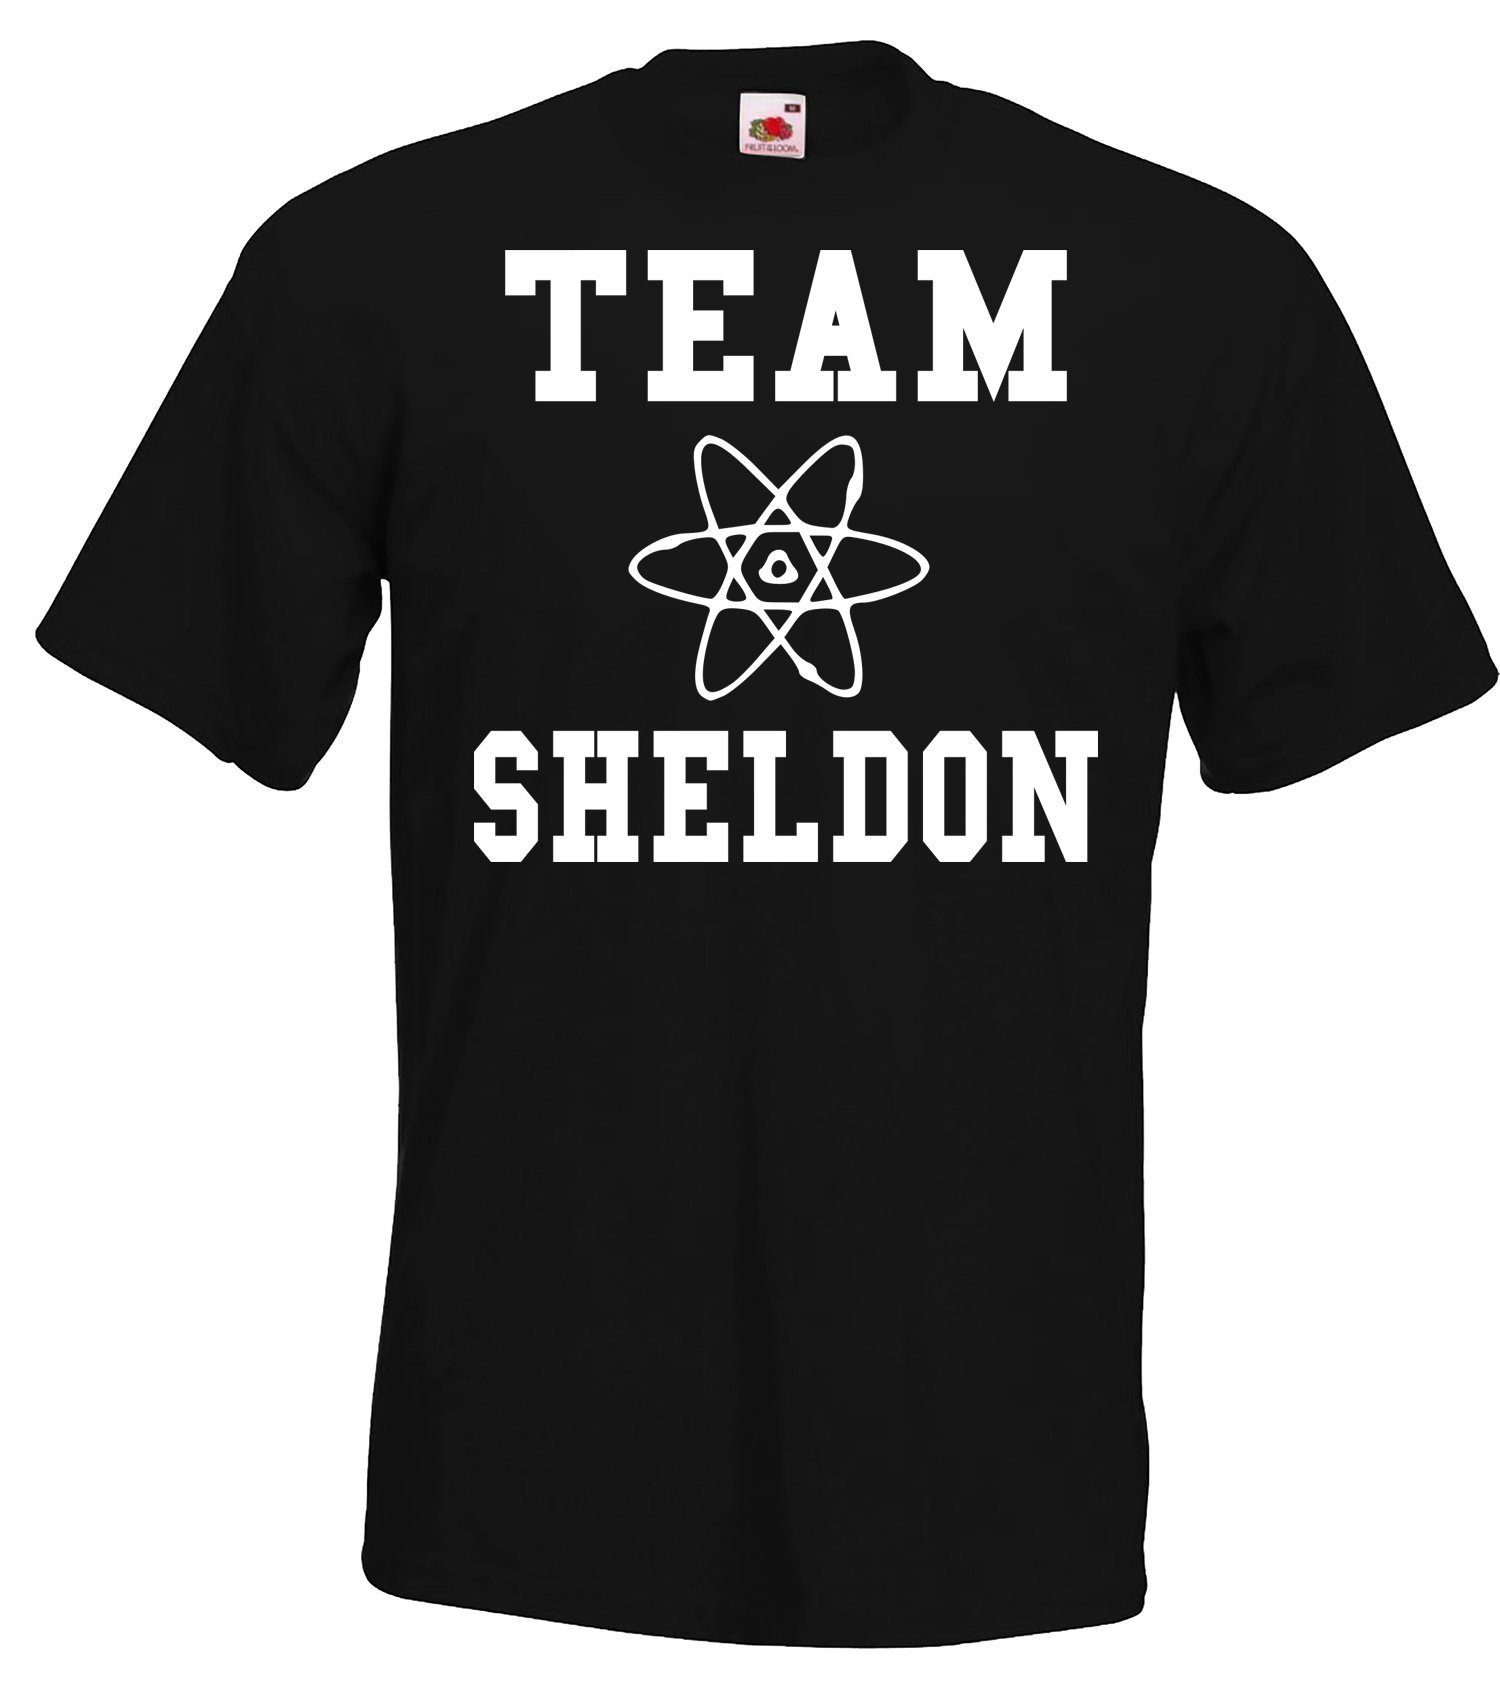 Designz Herren T-Shirt Youth Schwarz mit Sheldon Team trendigem T-Shirt Motiv